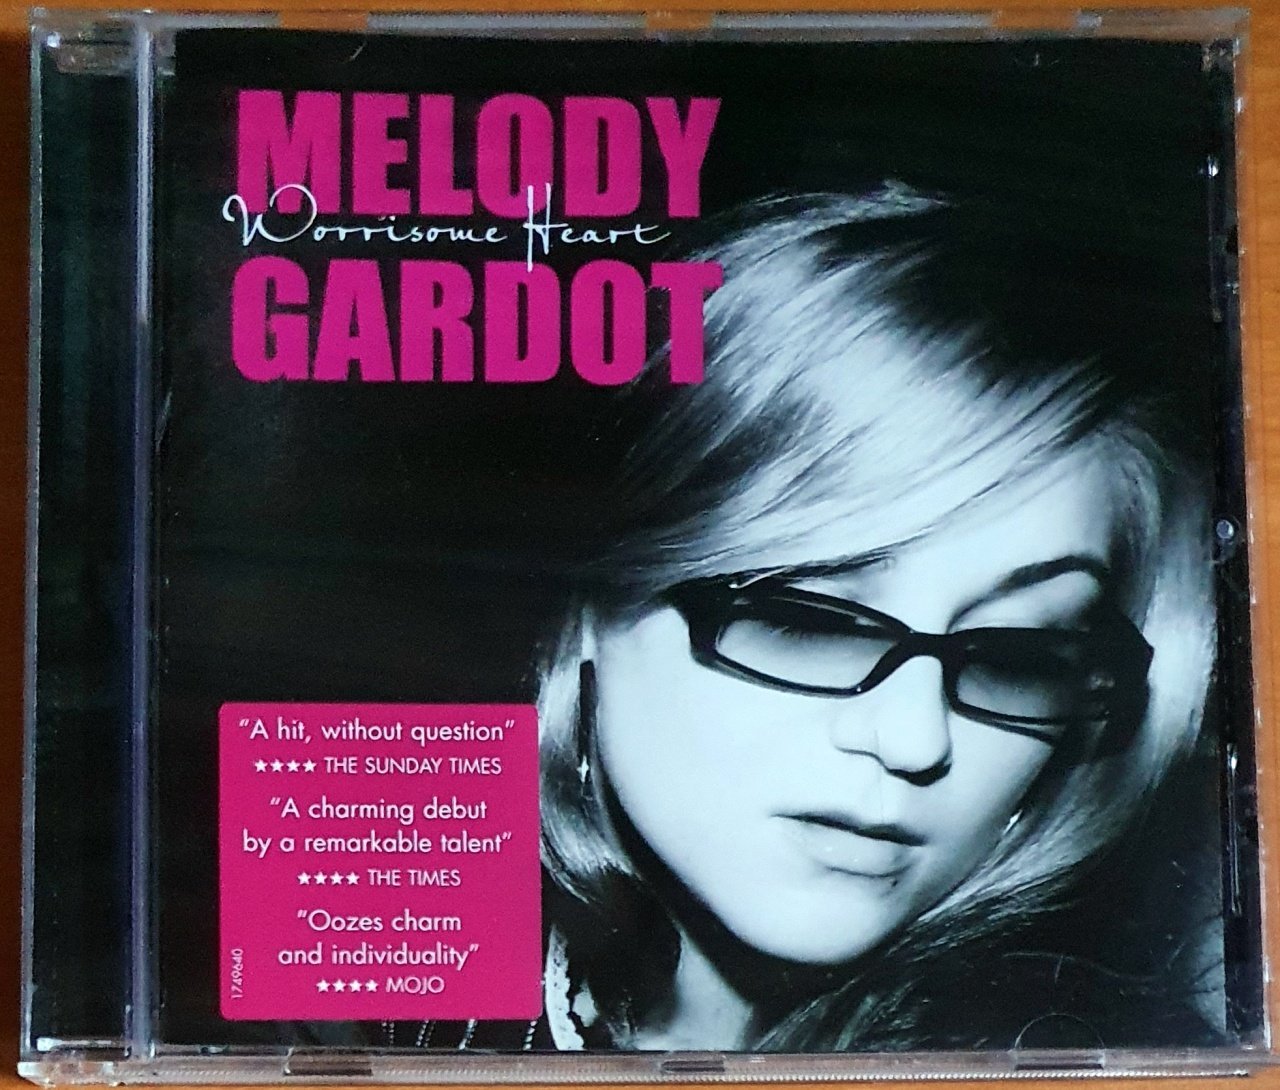 MELODY GARDOT - WORRISOME HEART (2008) - CD 2.EL